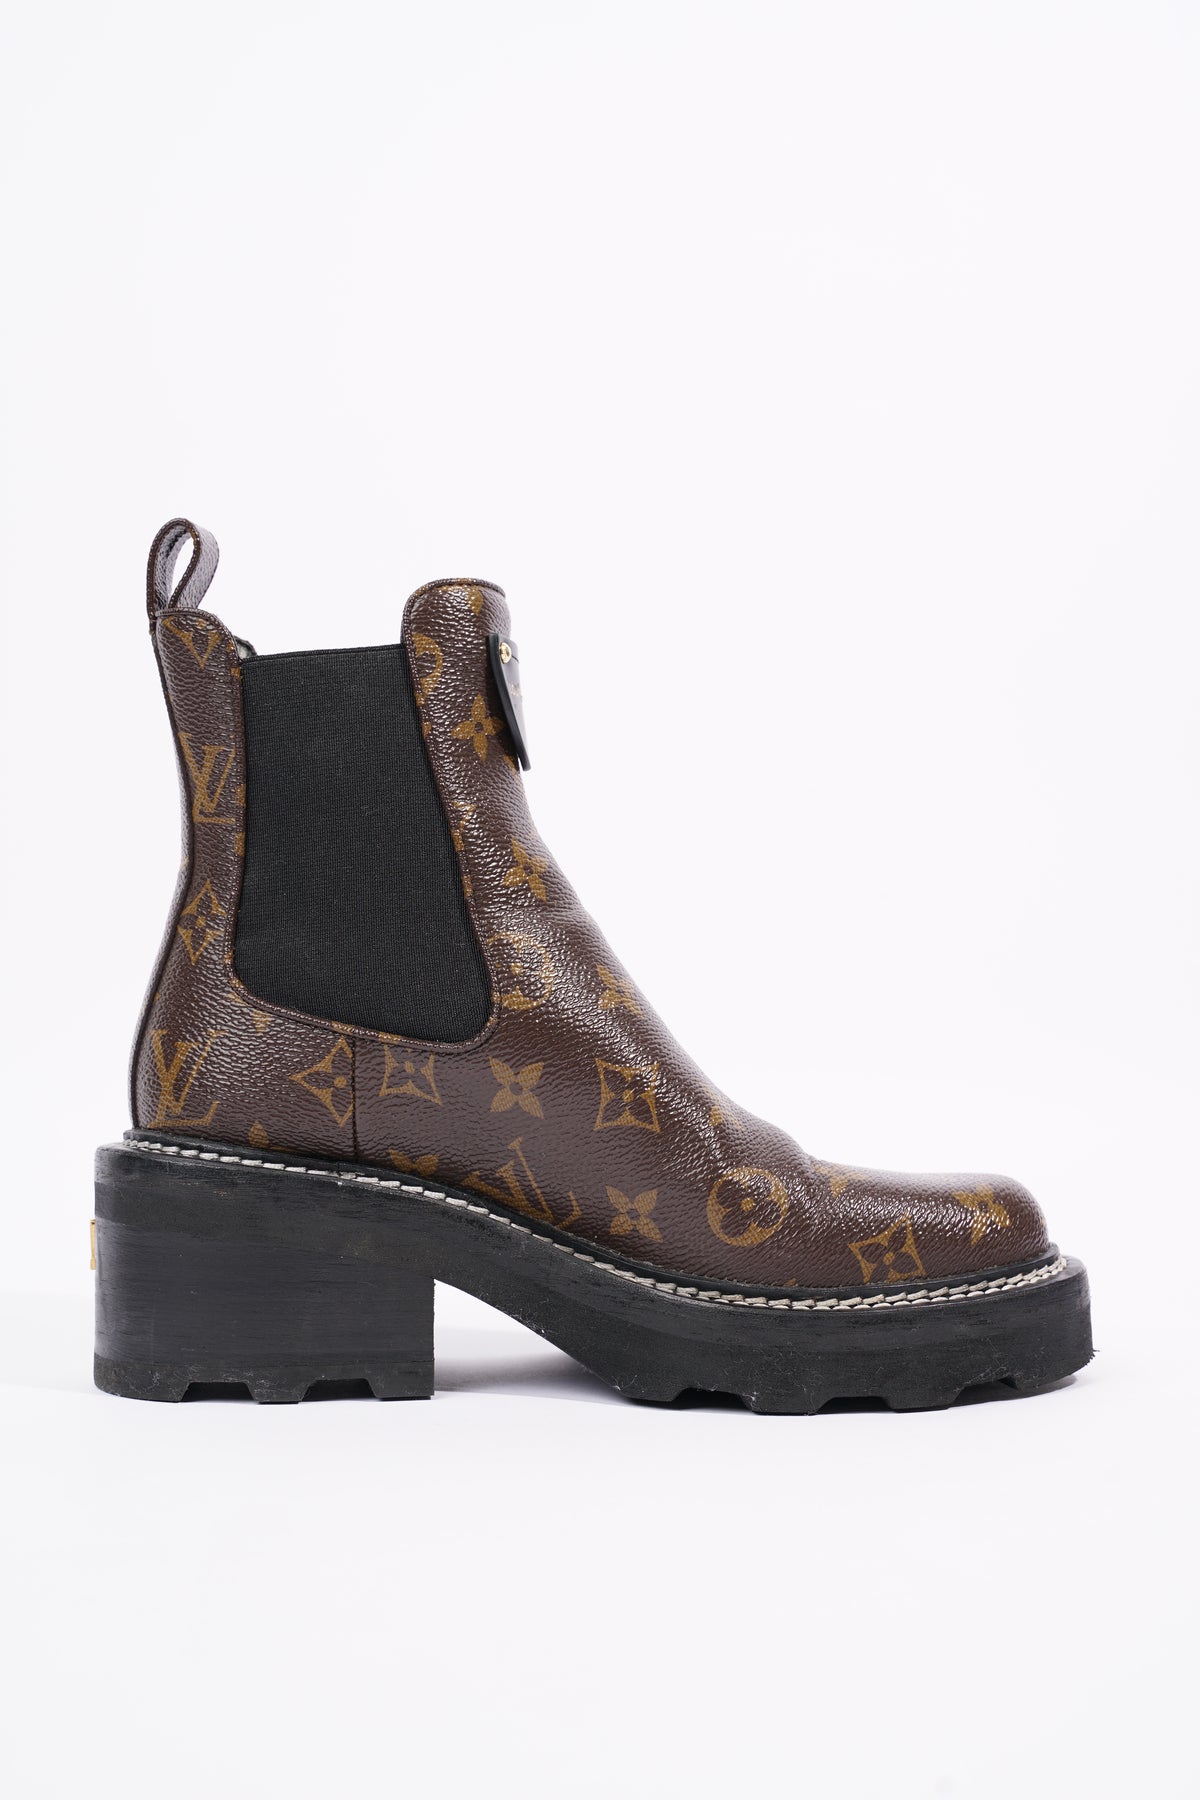 Louis Vuitton Star Trail Boots Size Eu 36